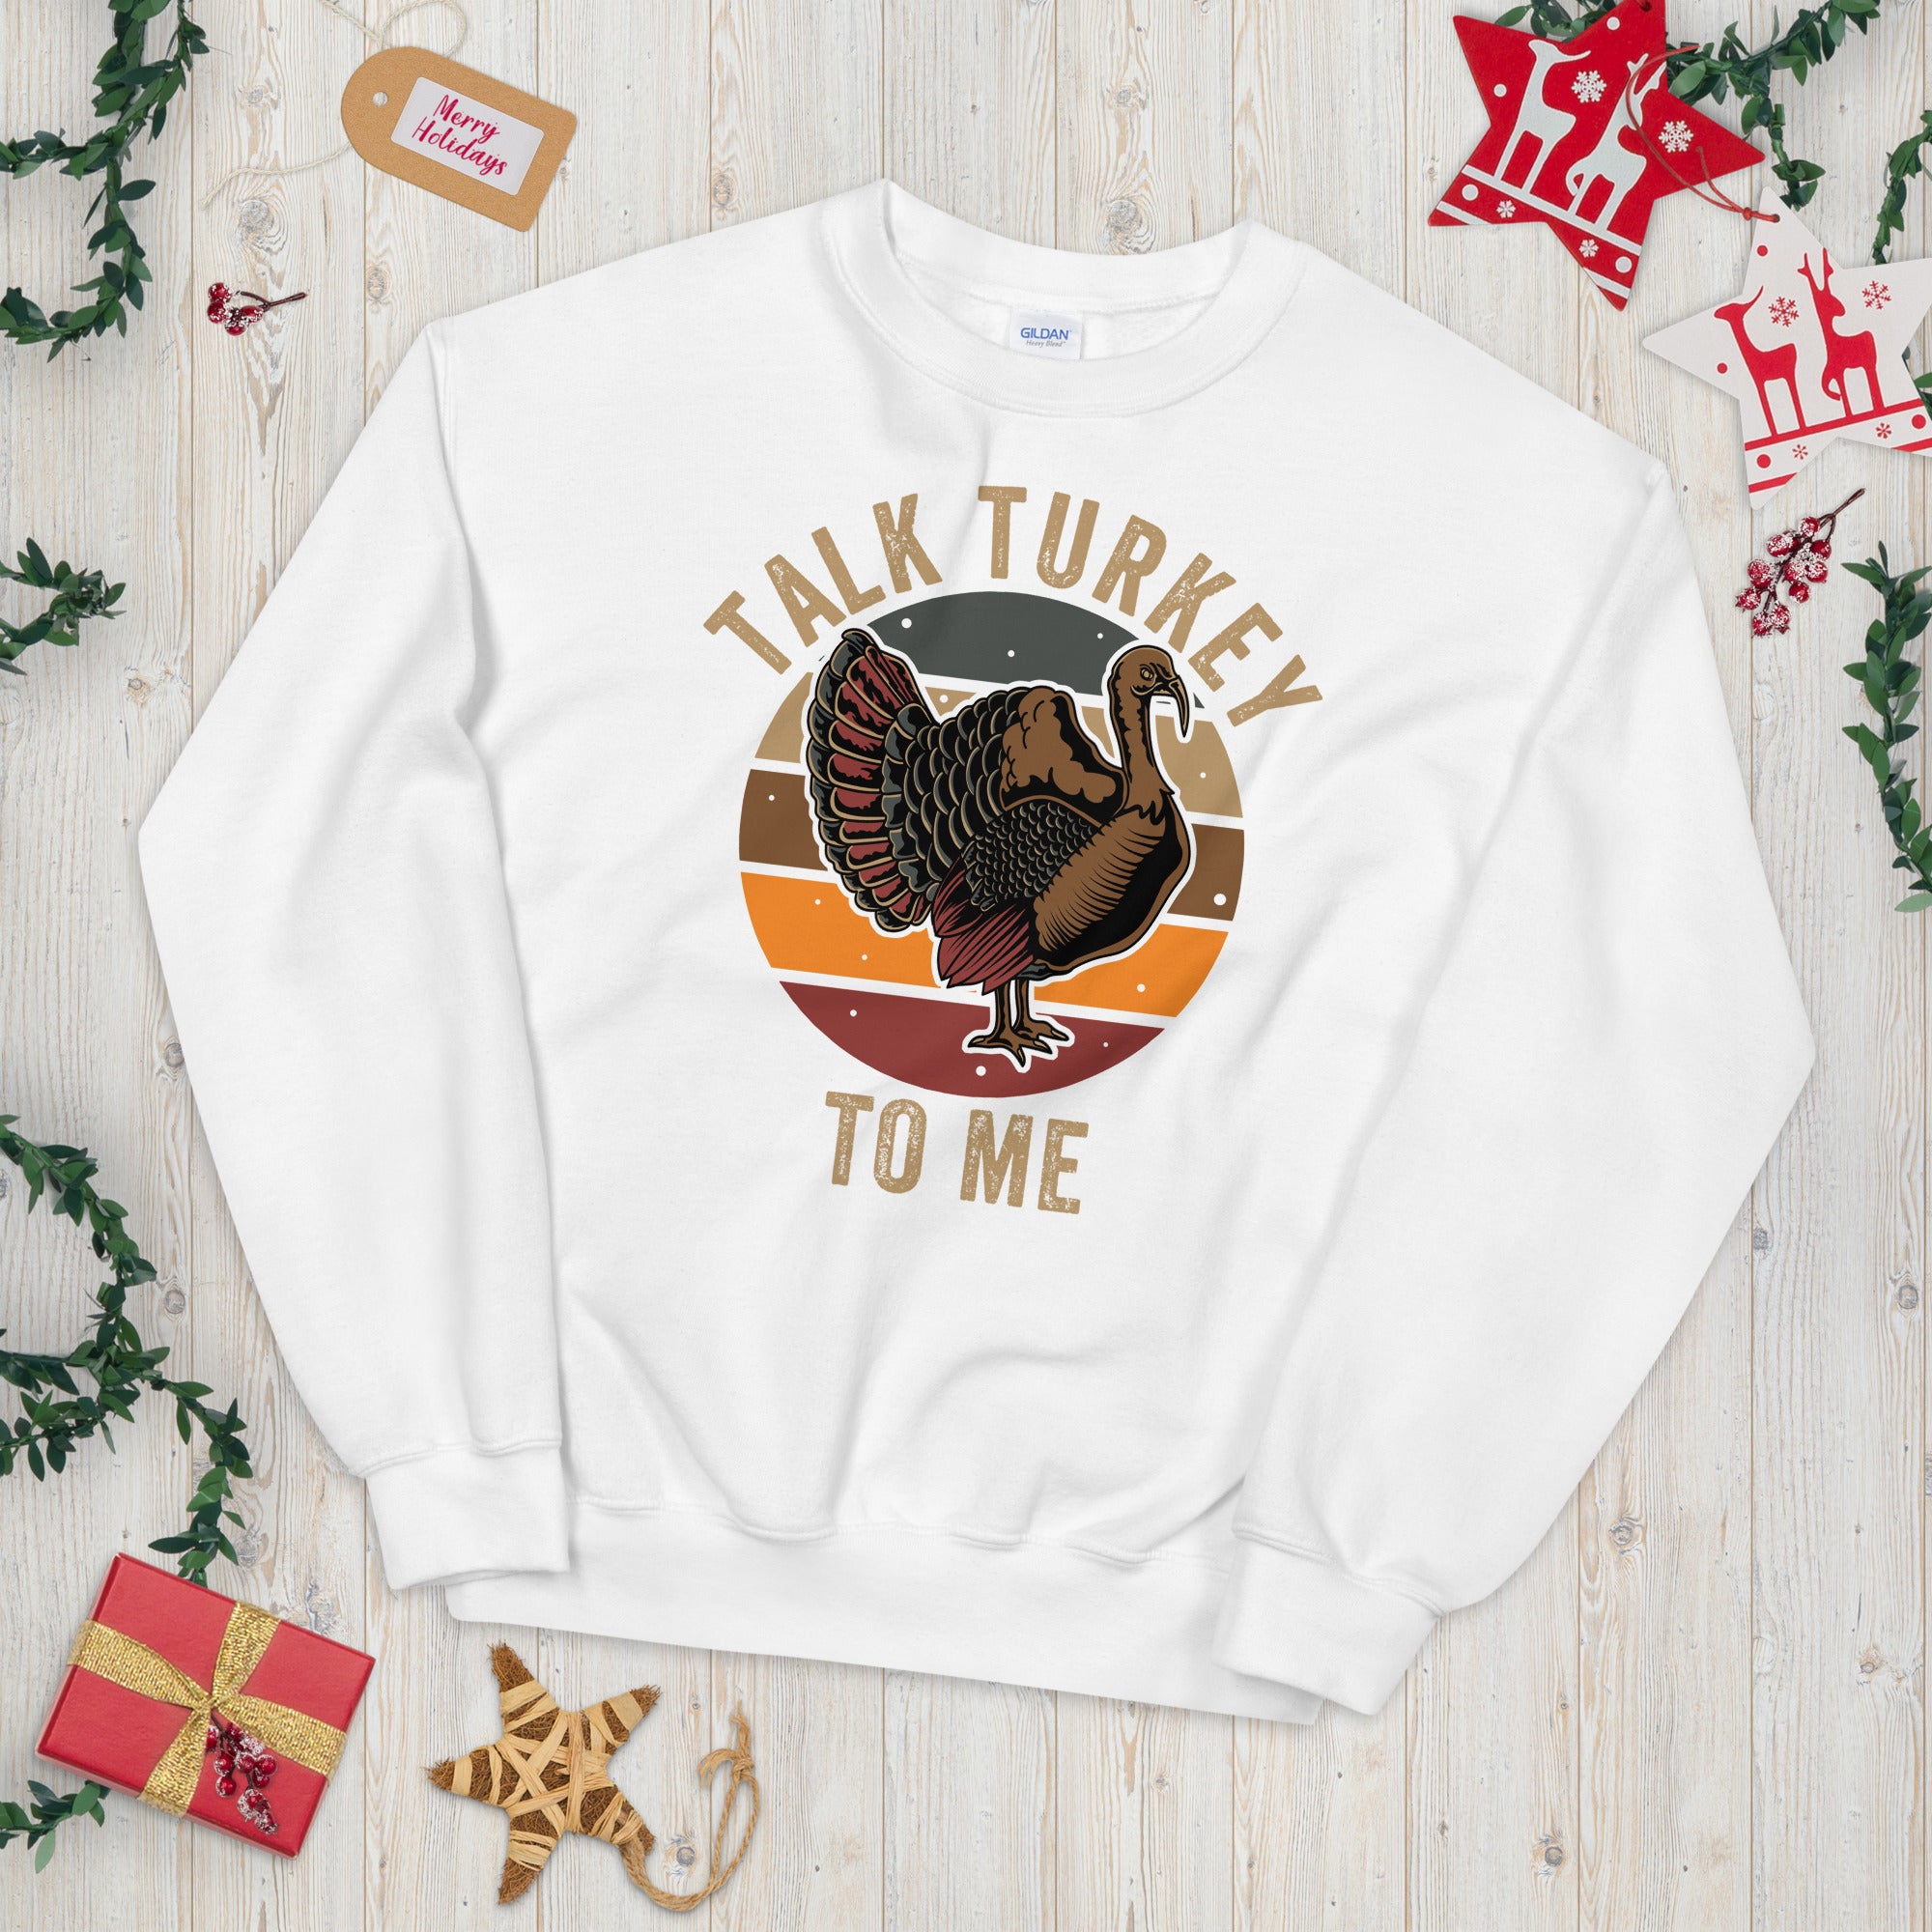 Talk Turkey To Me Sweatshirt, Thanksgiving Sweater, Funny Thanksgiving Sweater, Thanksgiving Dinner Sweater, Turkey Sweatshirt - Madeinsea©